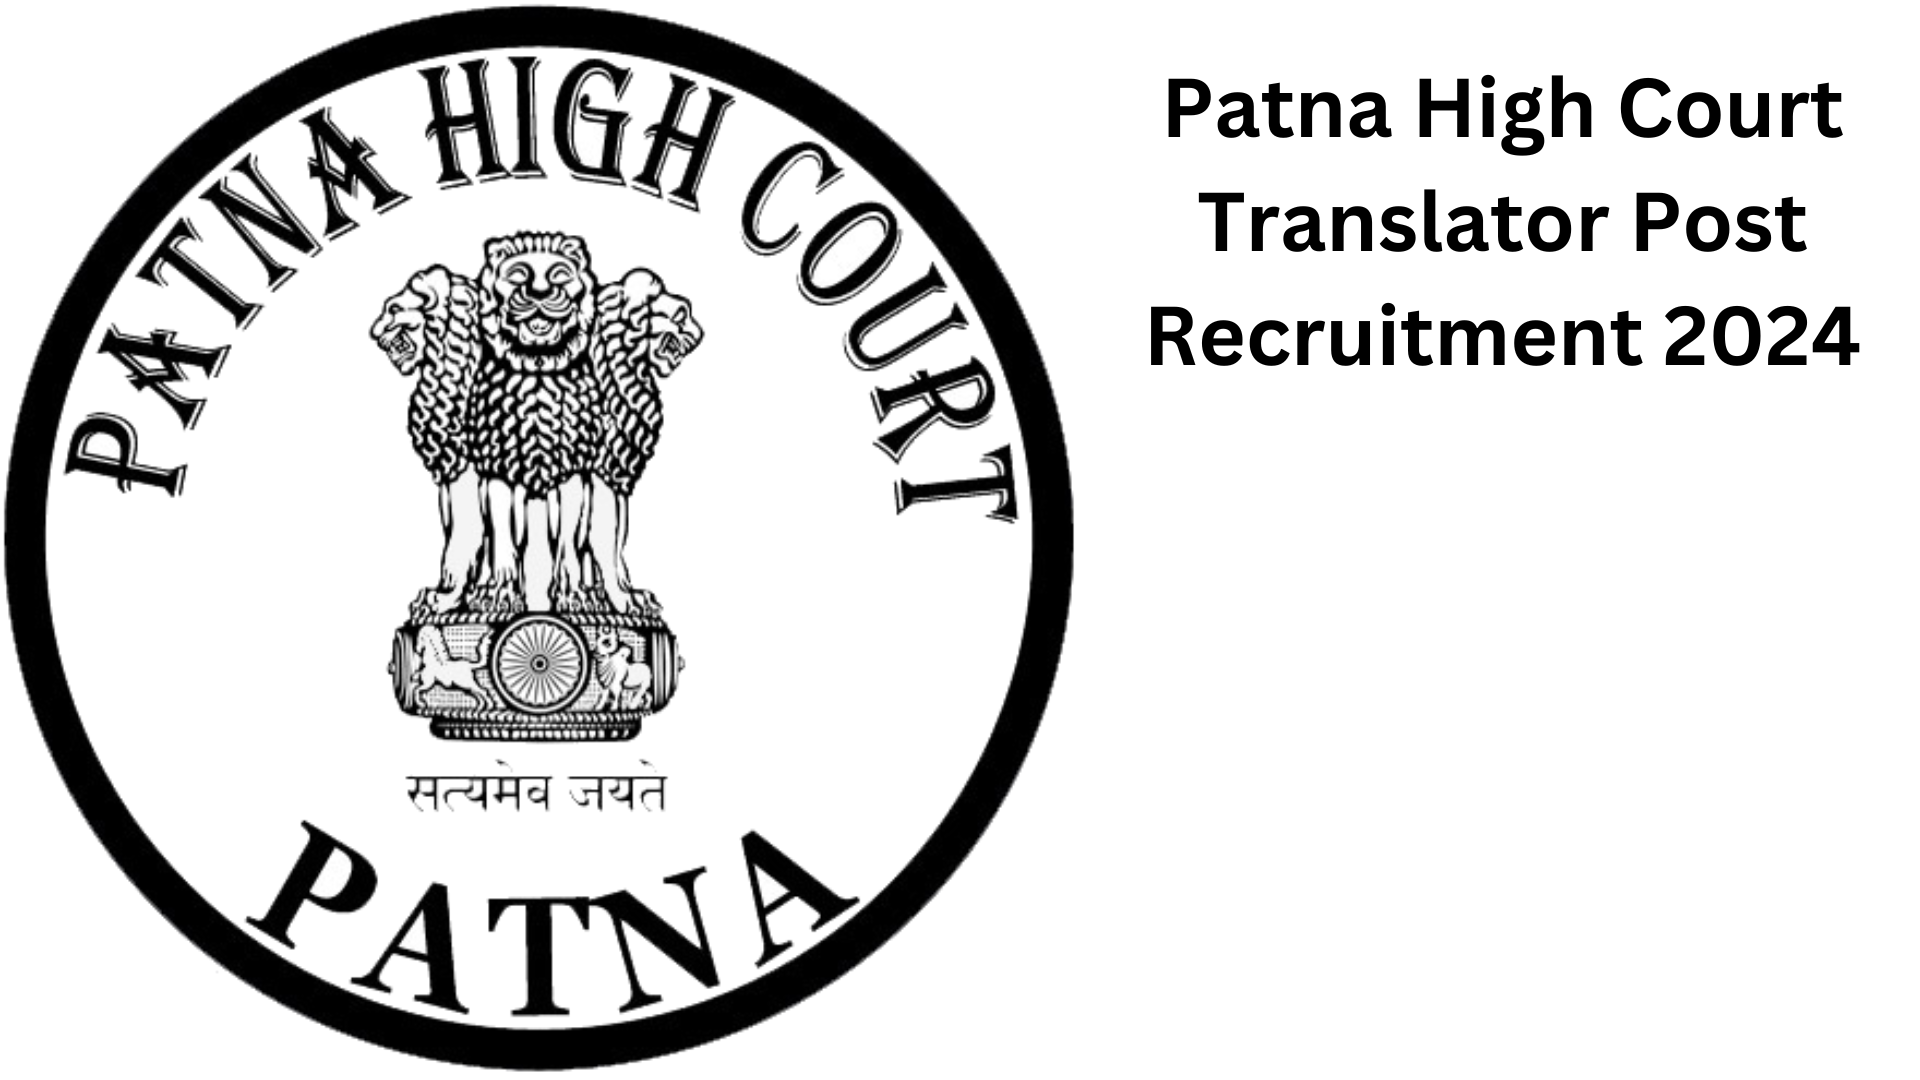 Patna High Court Translator Vacancy 2024, Salary Up To 1,42,000, Apply Now, Eligibility Criteria